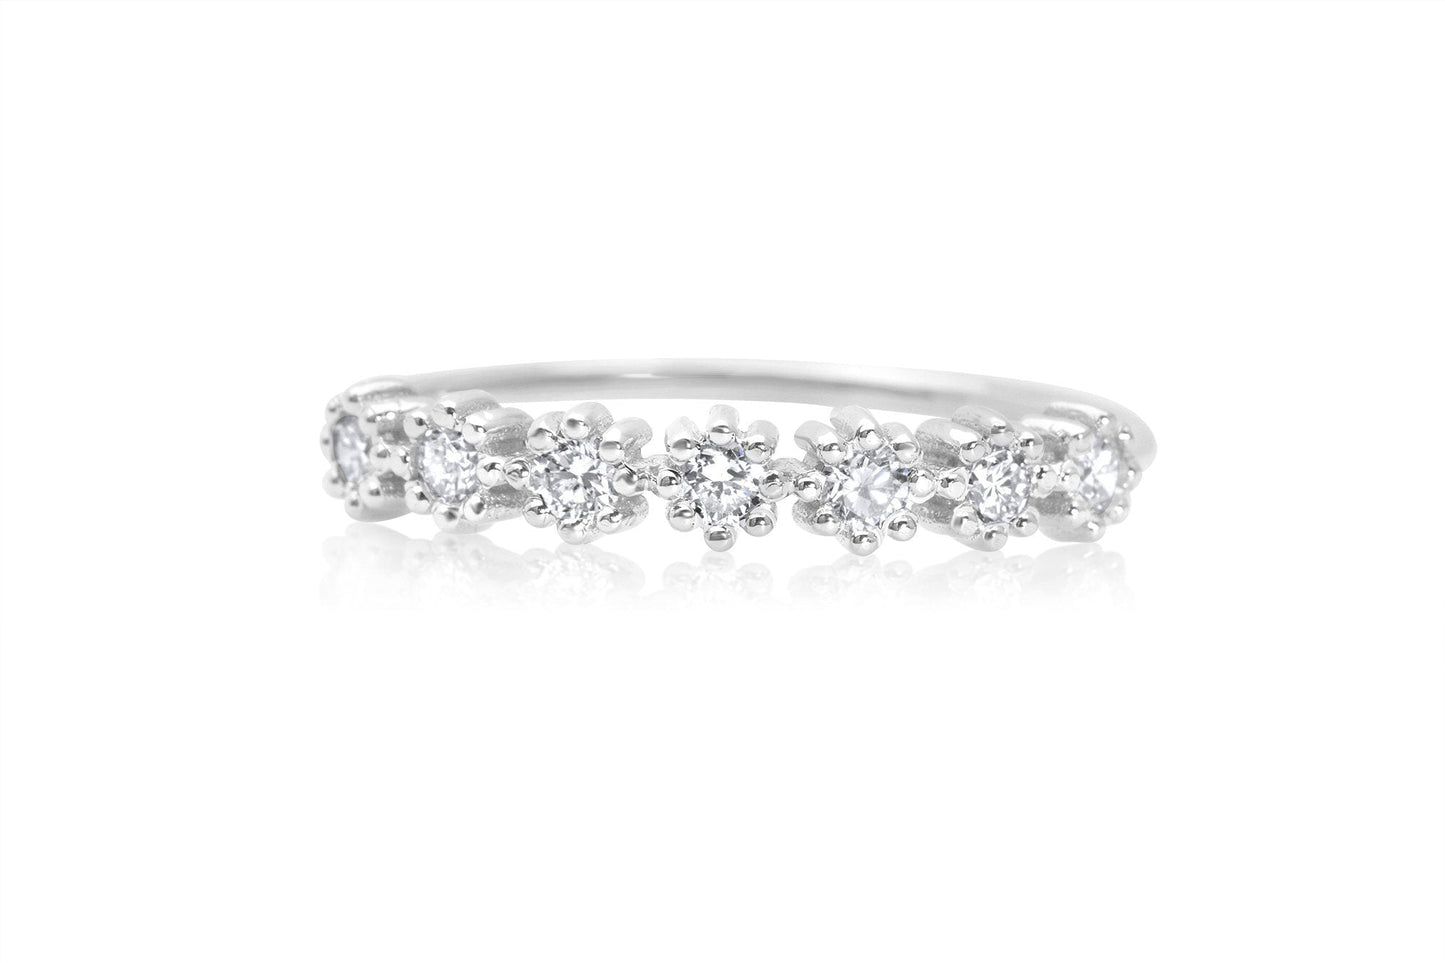 14k Gold Seven Diamond Wedding Ring